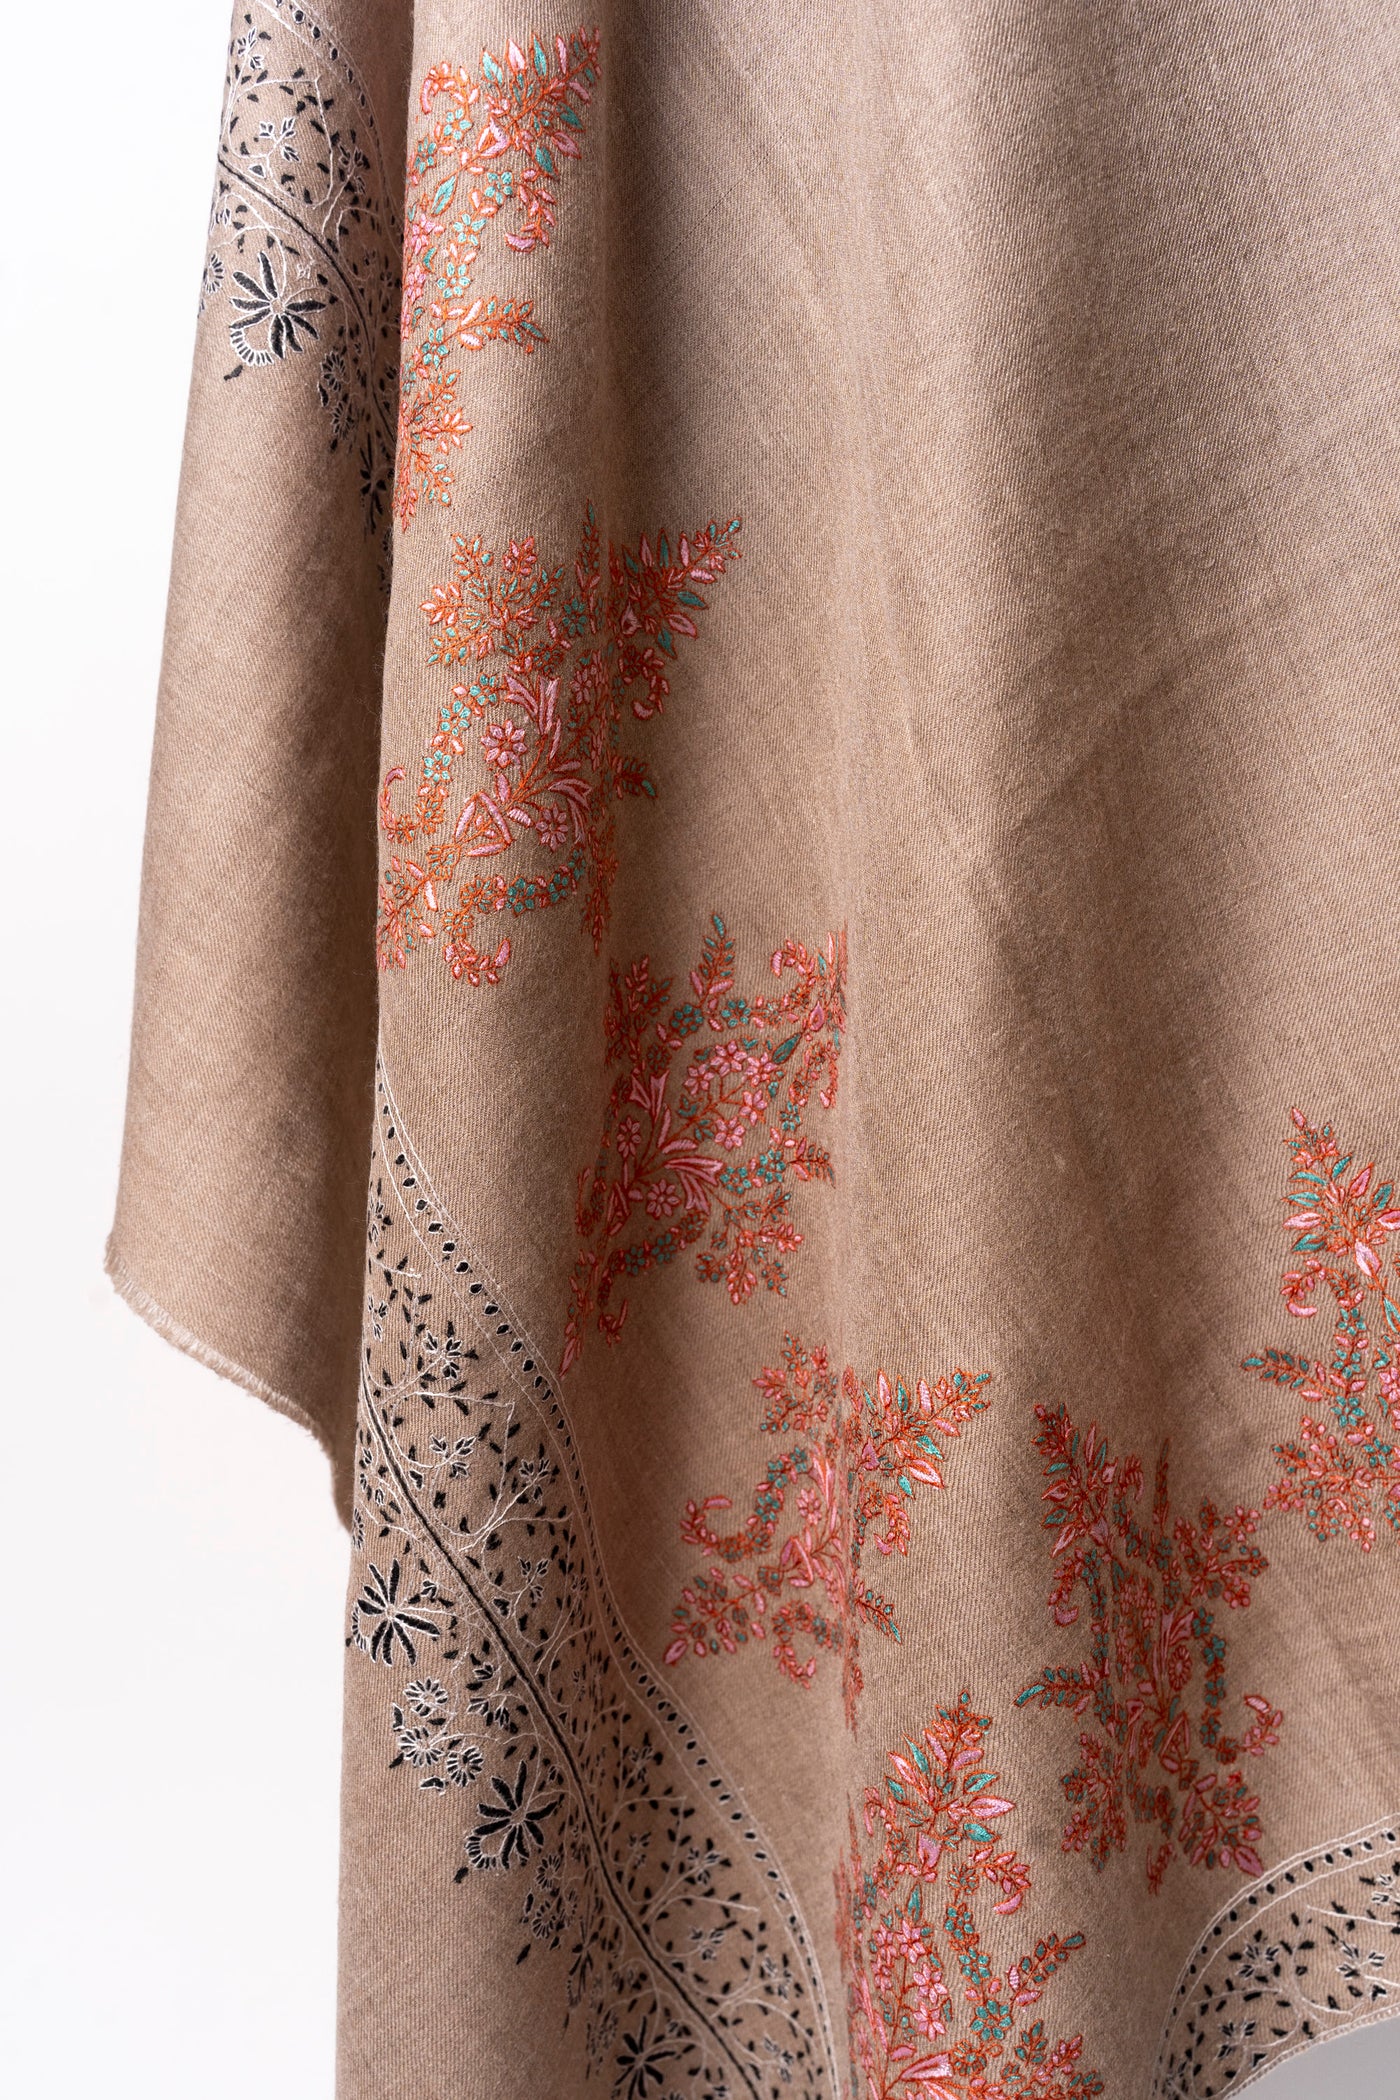 Sozni Garden Pashmina – Hand Embroidered Elegance Shawl